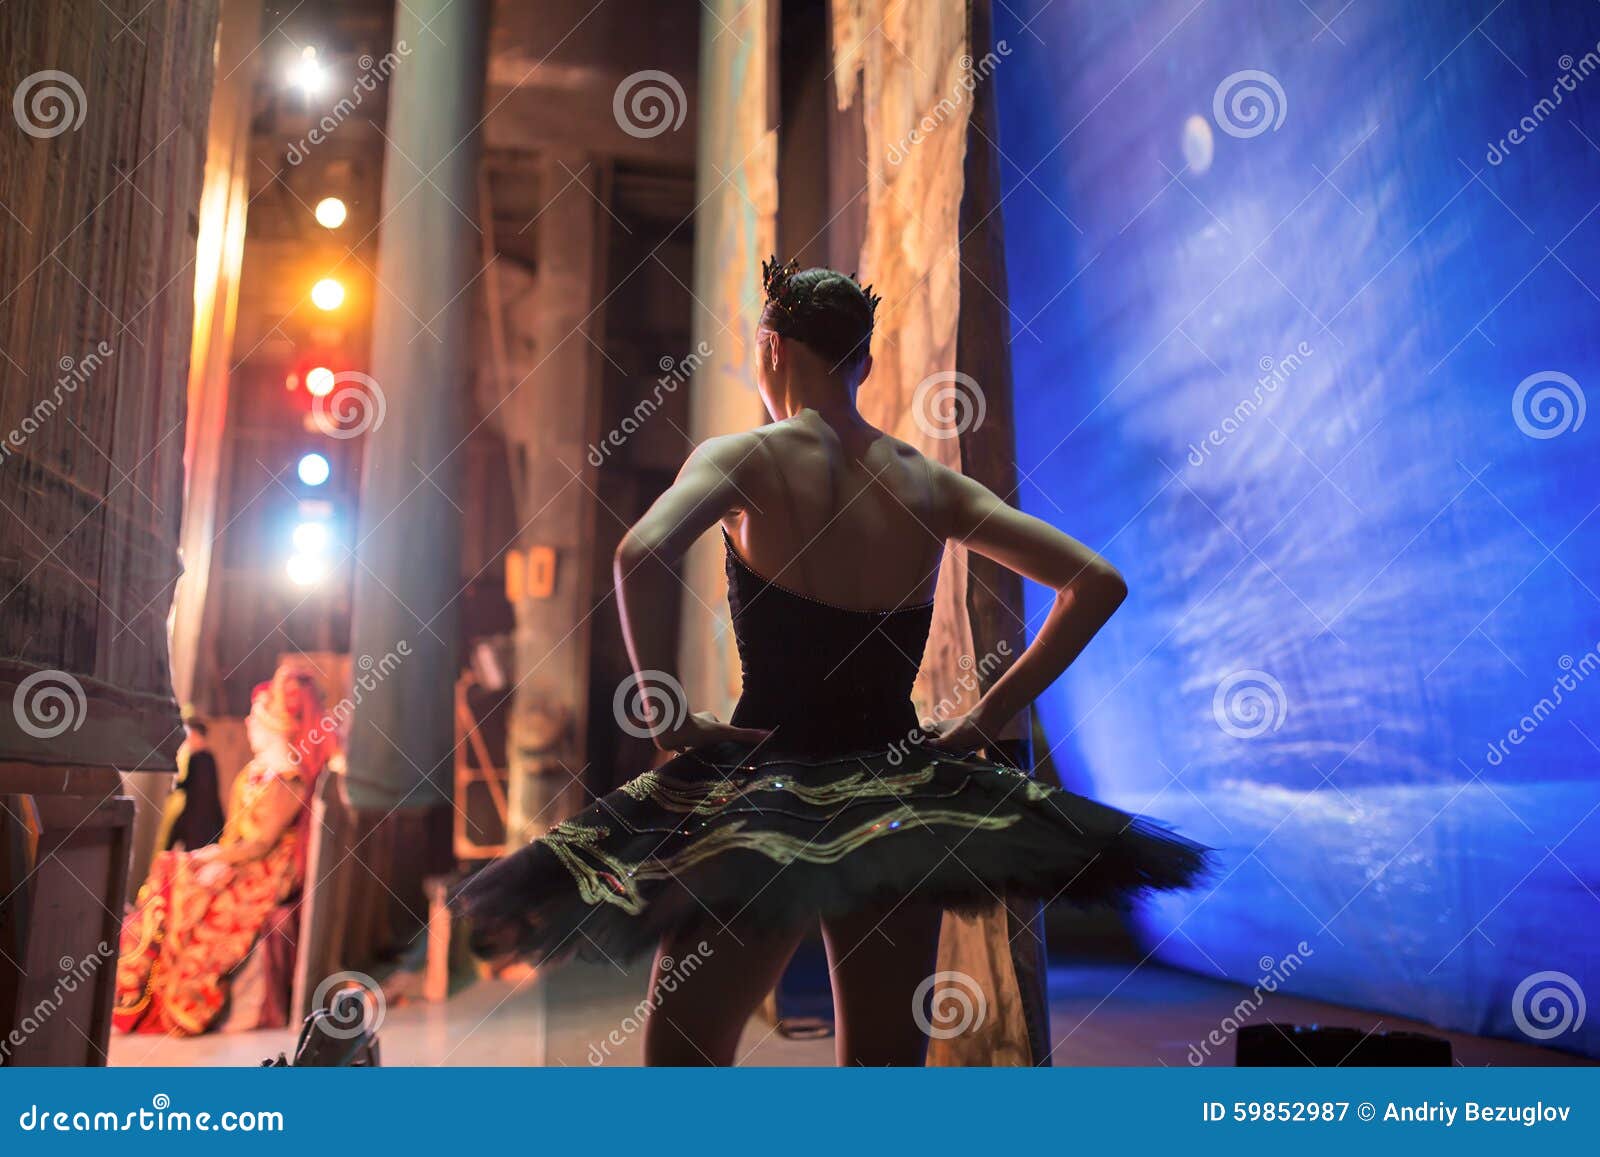 prima ballerina standing backstage